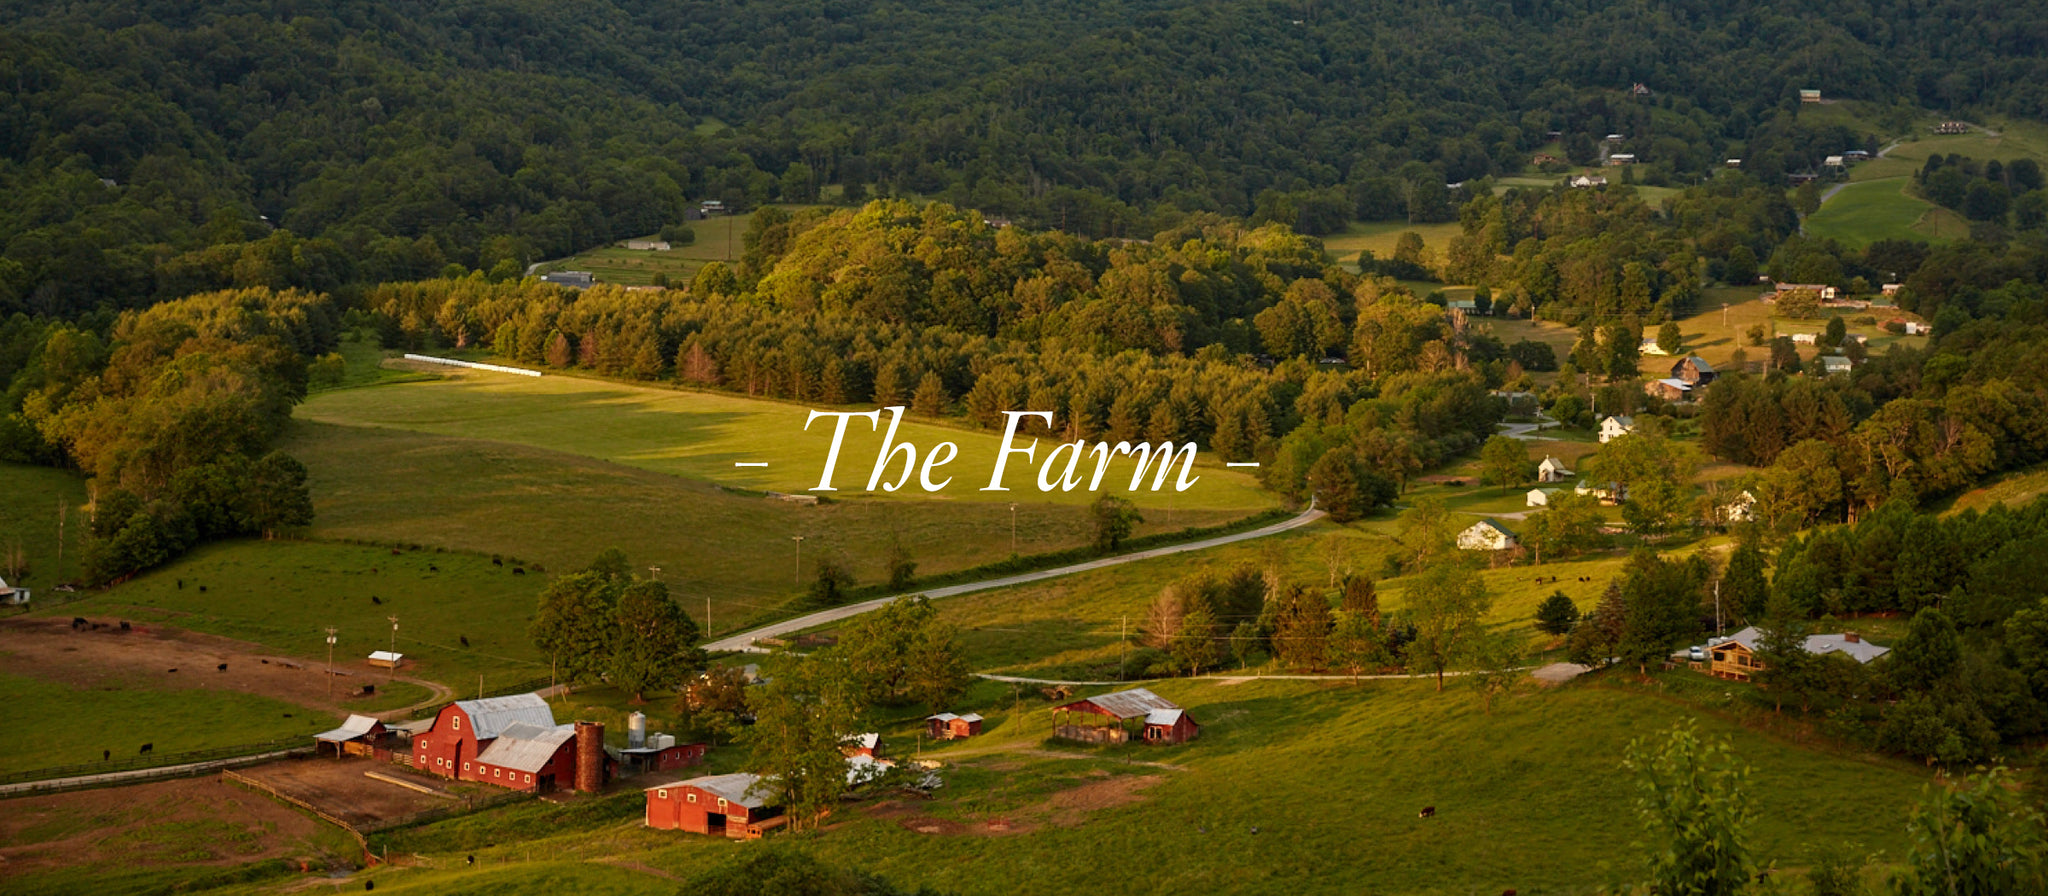 The Farm – Shipley Farms